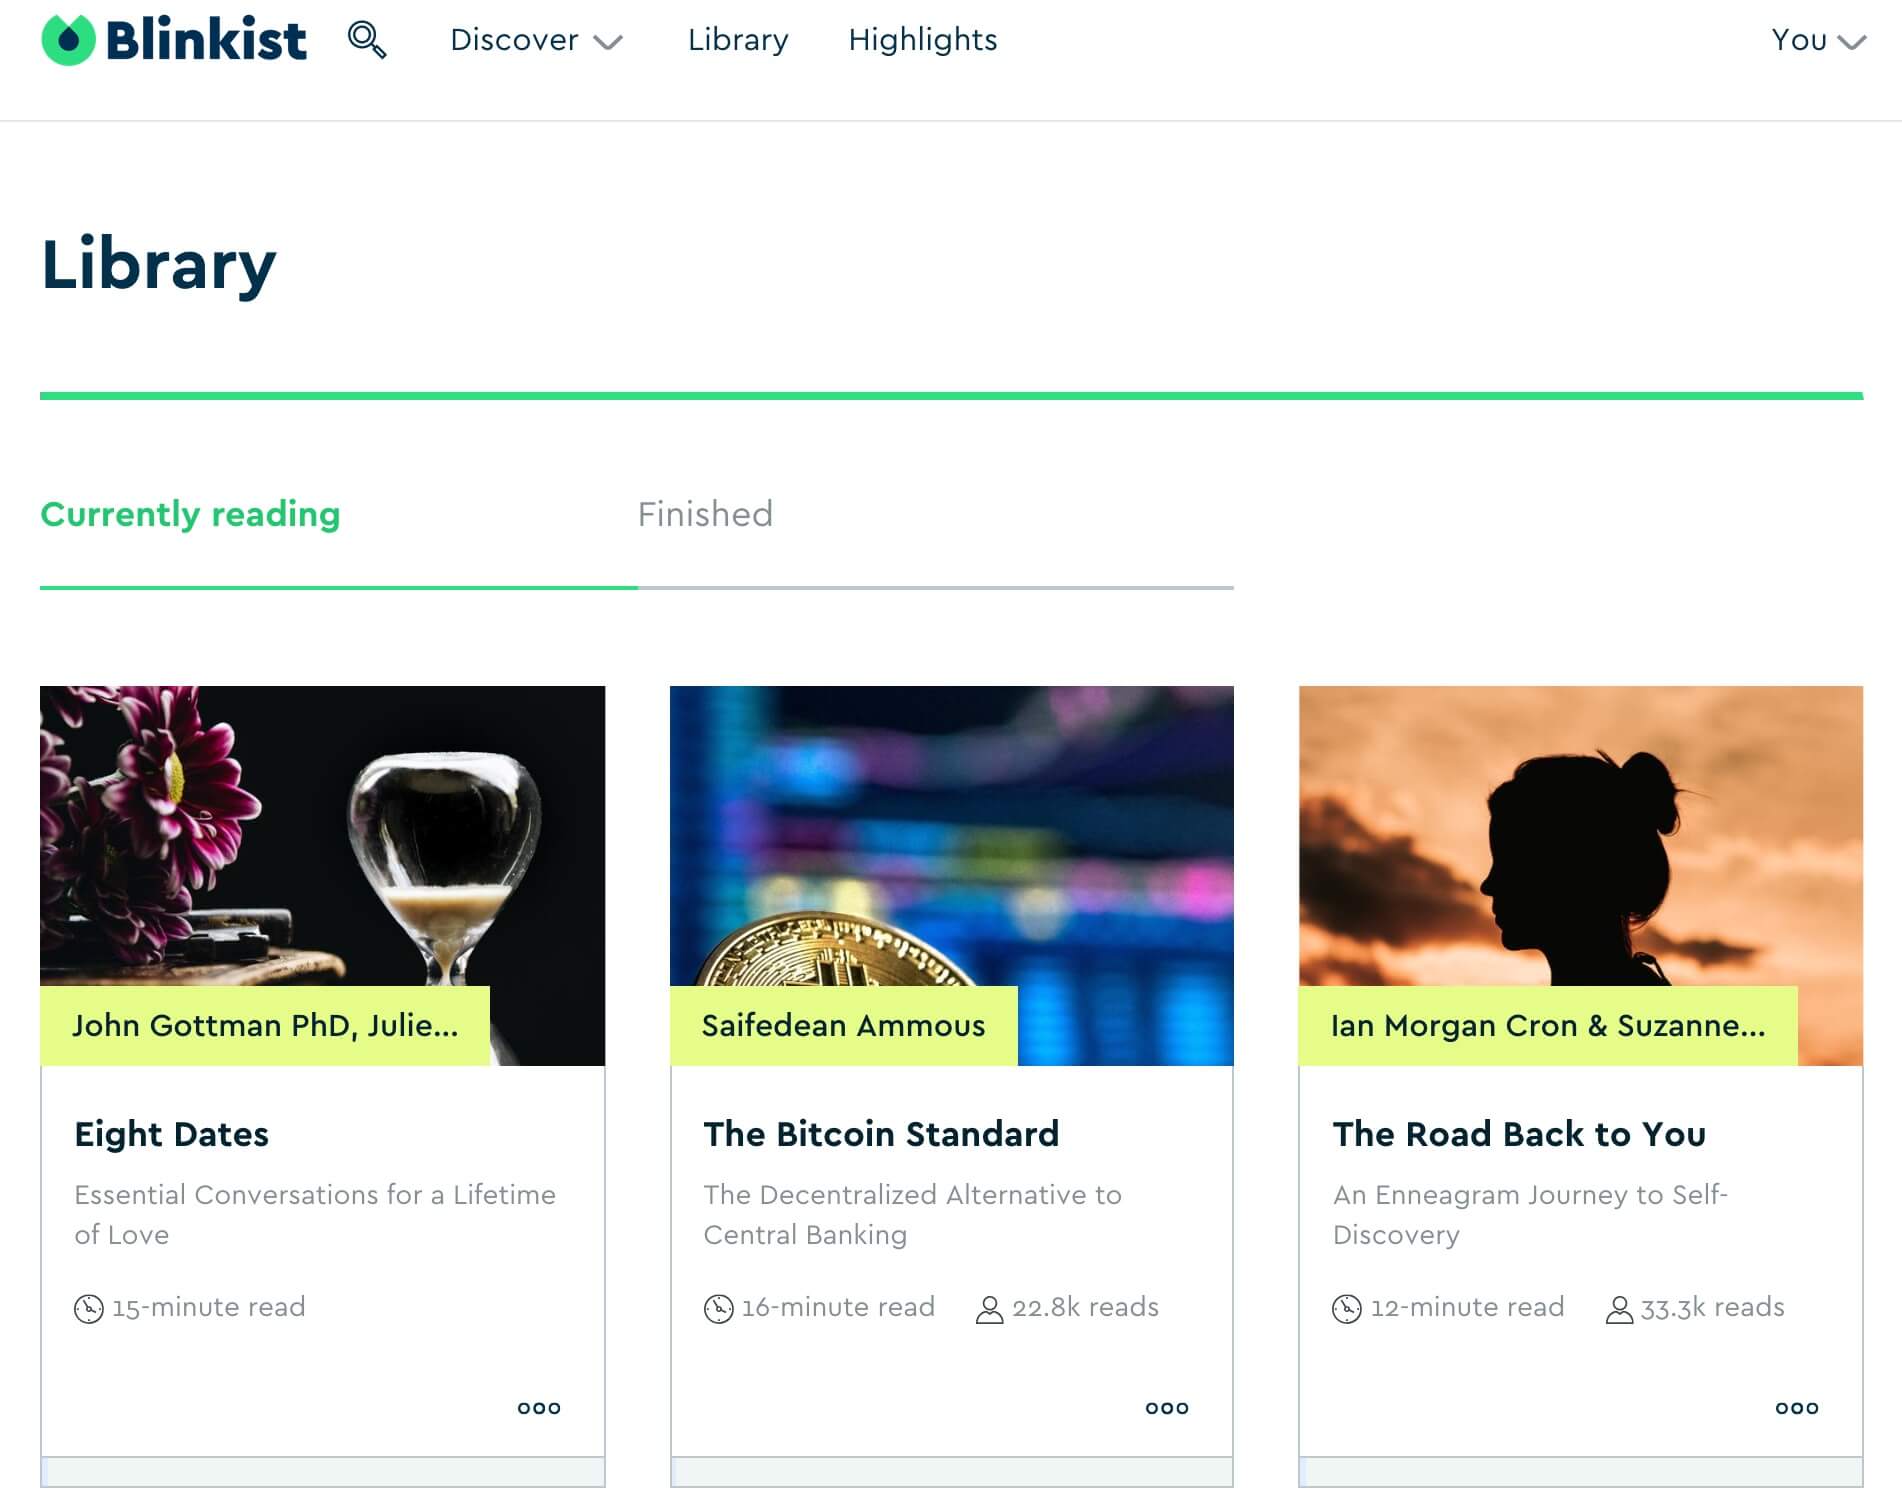 Blinkist Explained: What is Blinkist? 2019 Library